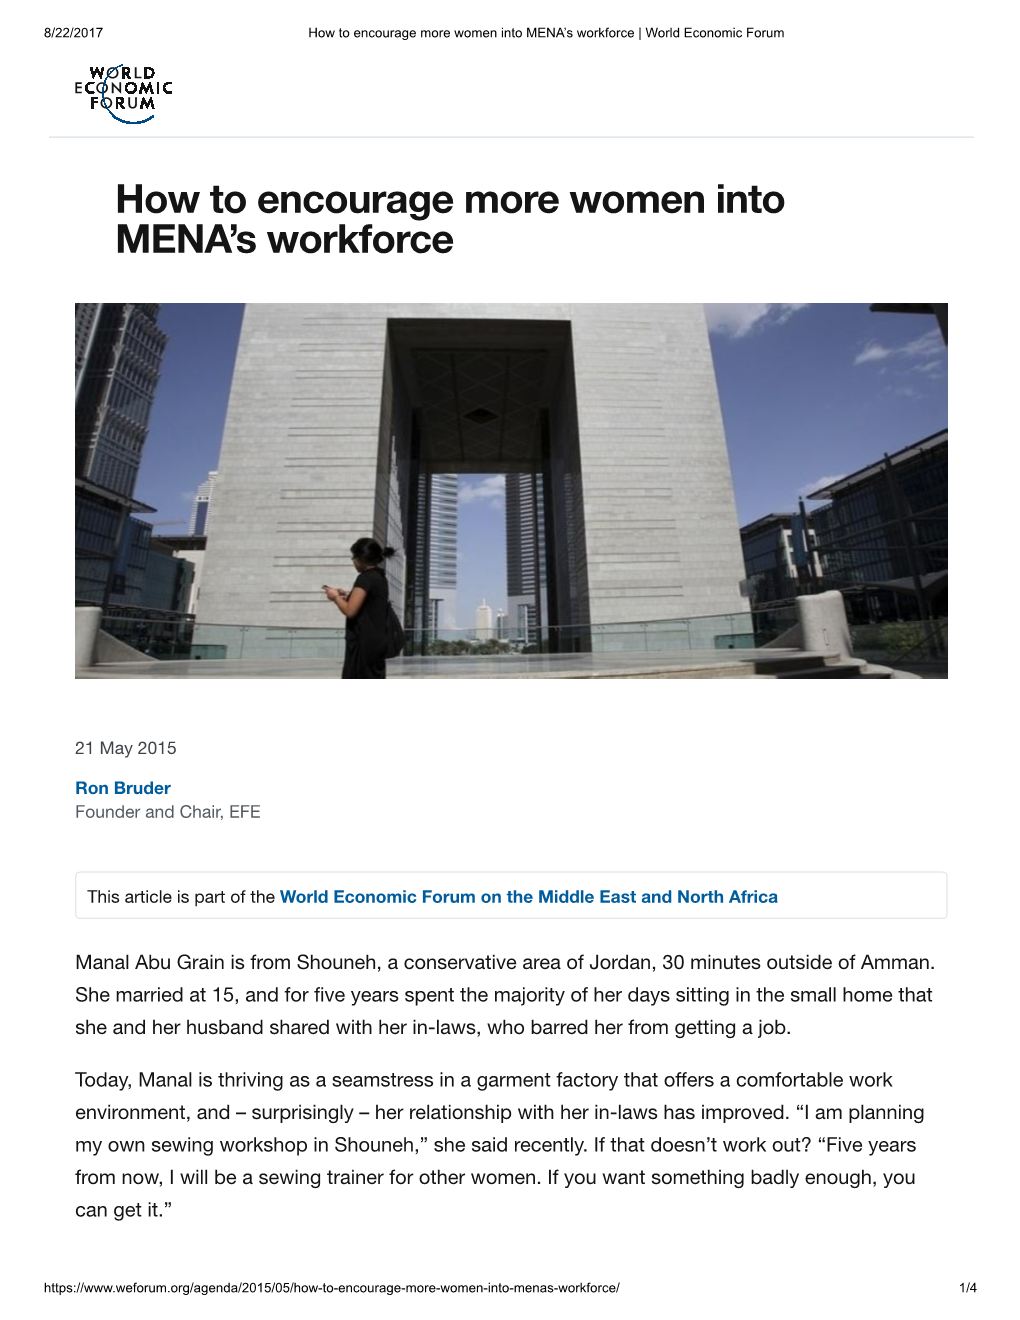 How to Encourage More Women Into MENA's Workforce